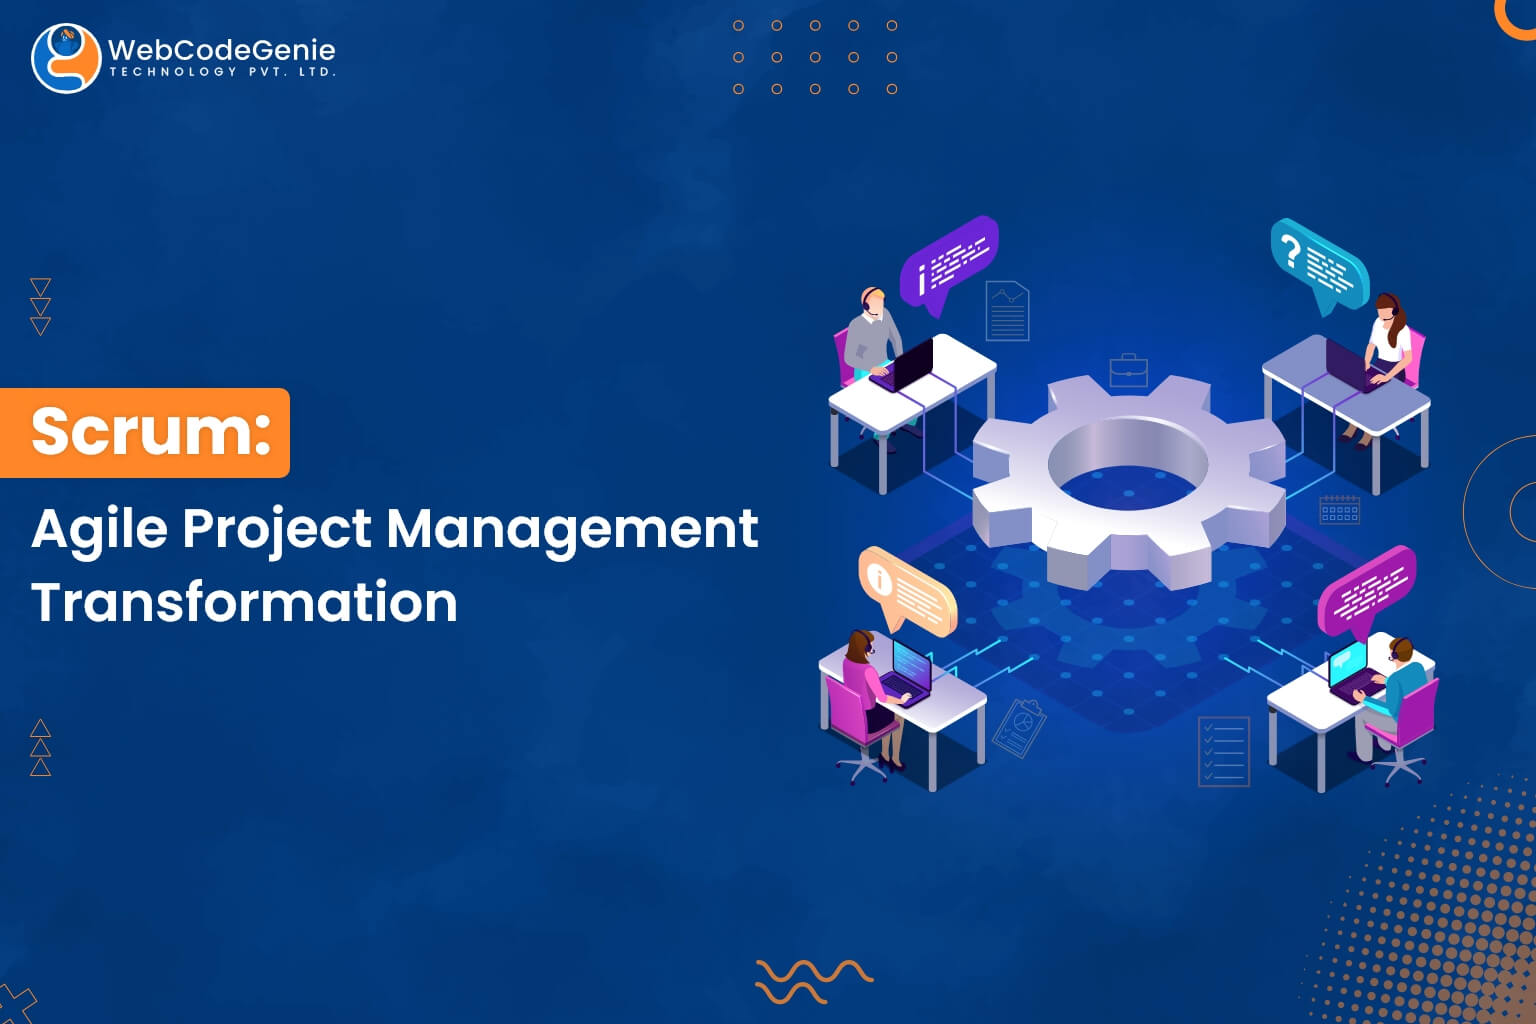 Scrum: Agile Project Management Transformation